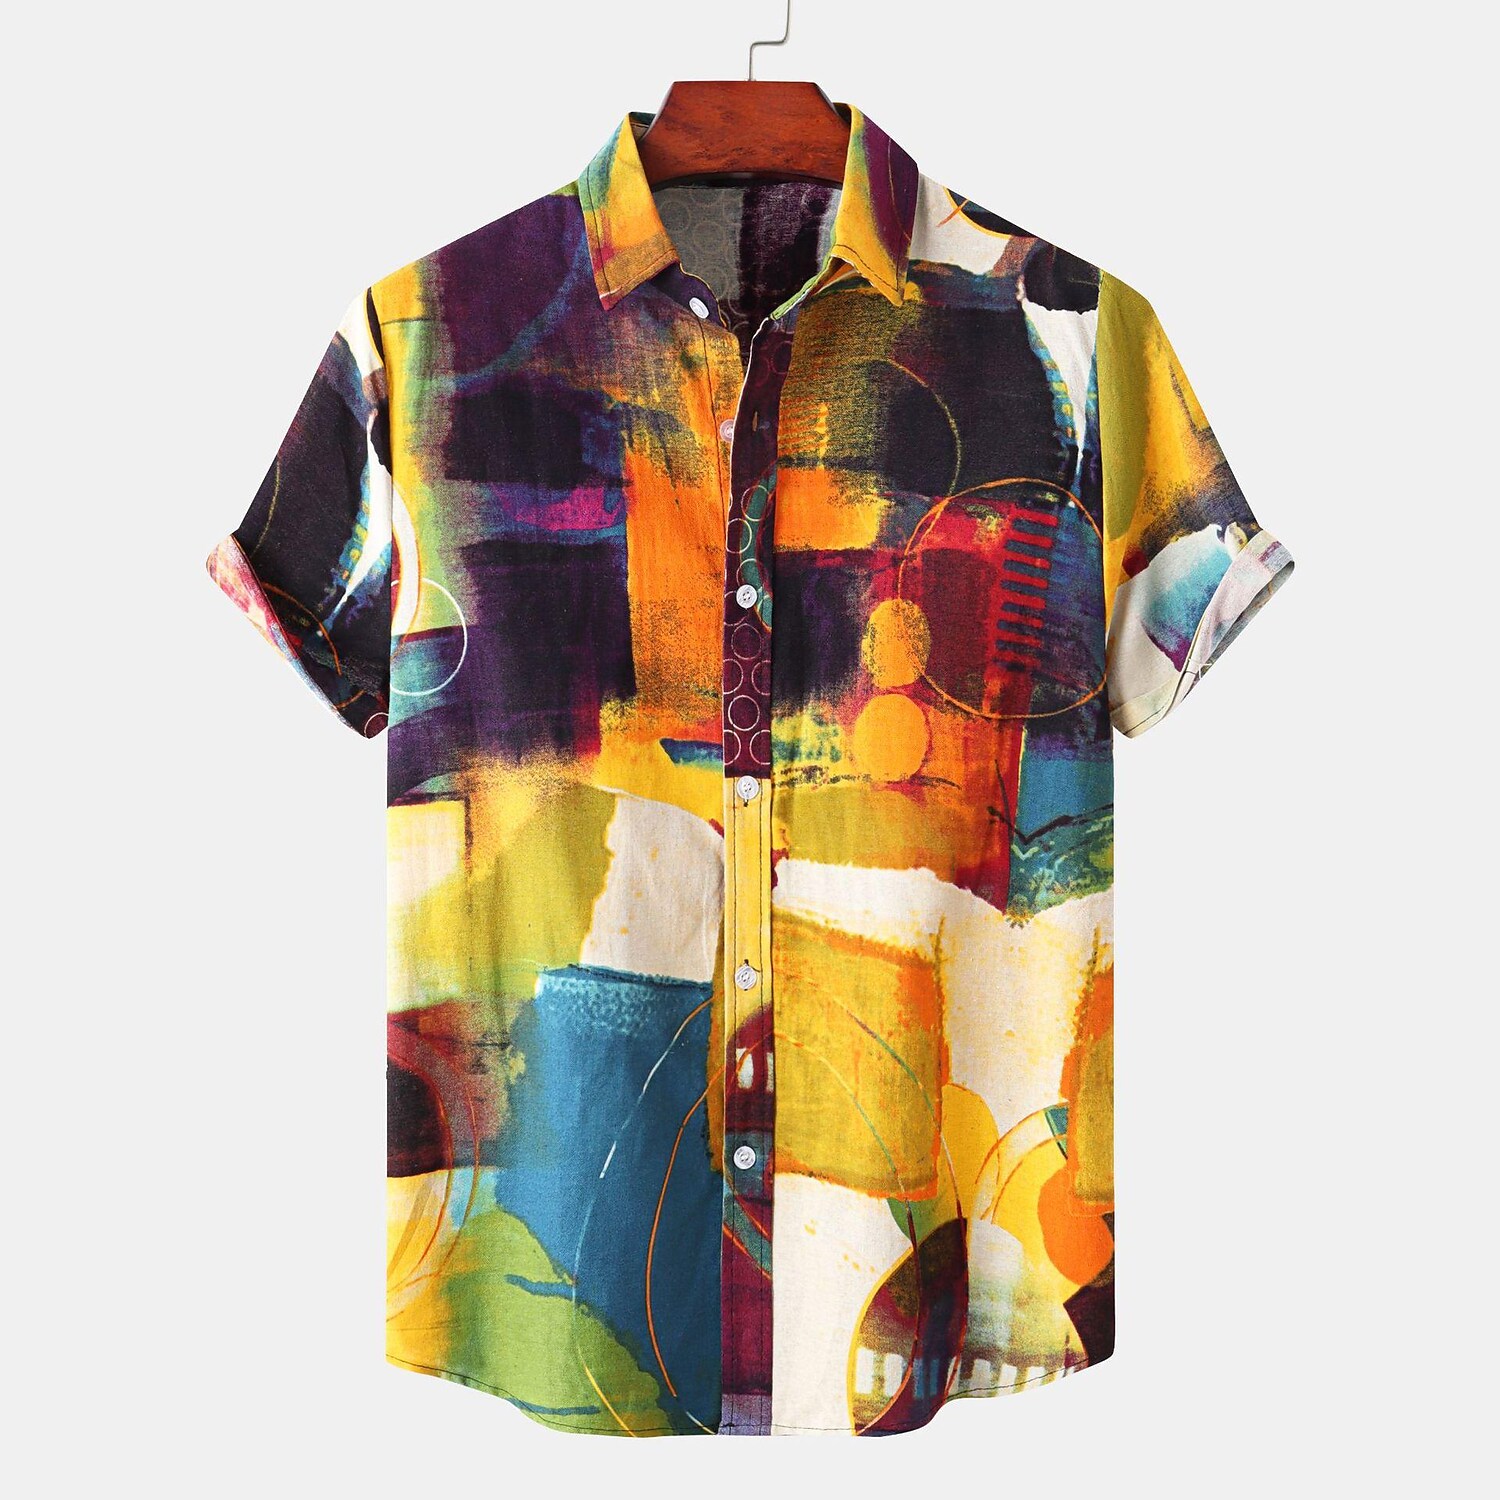 2021 summer amazon aliexpress foreign trade cross-border color matching summer casual shirts men's lapel shirts tops